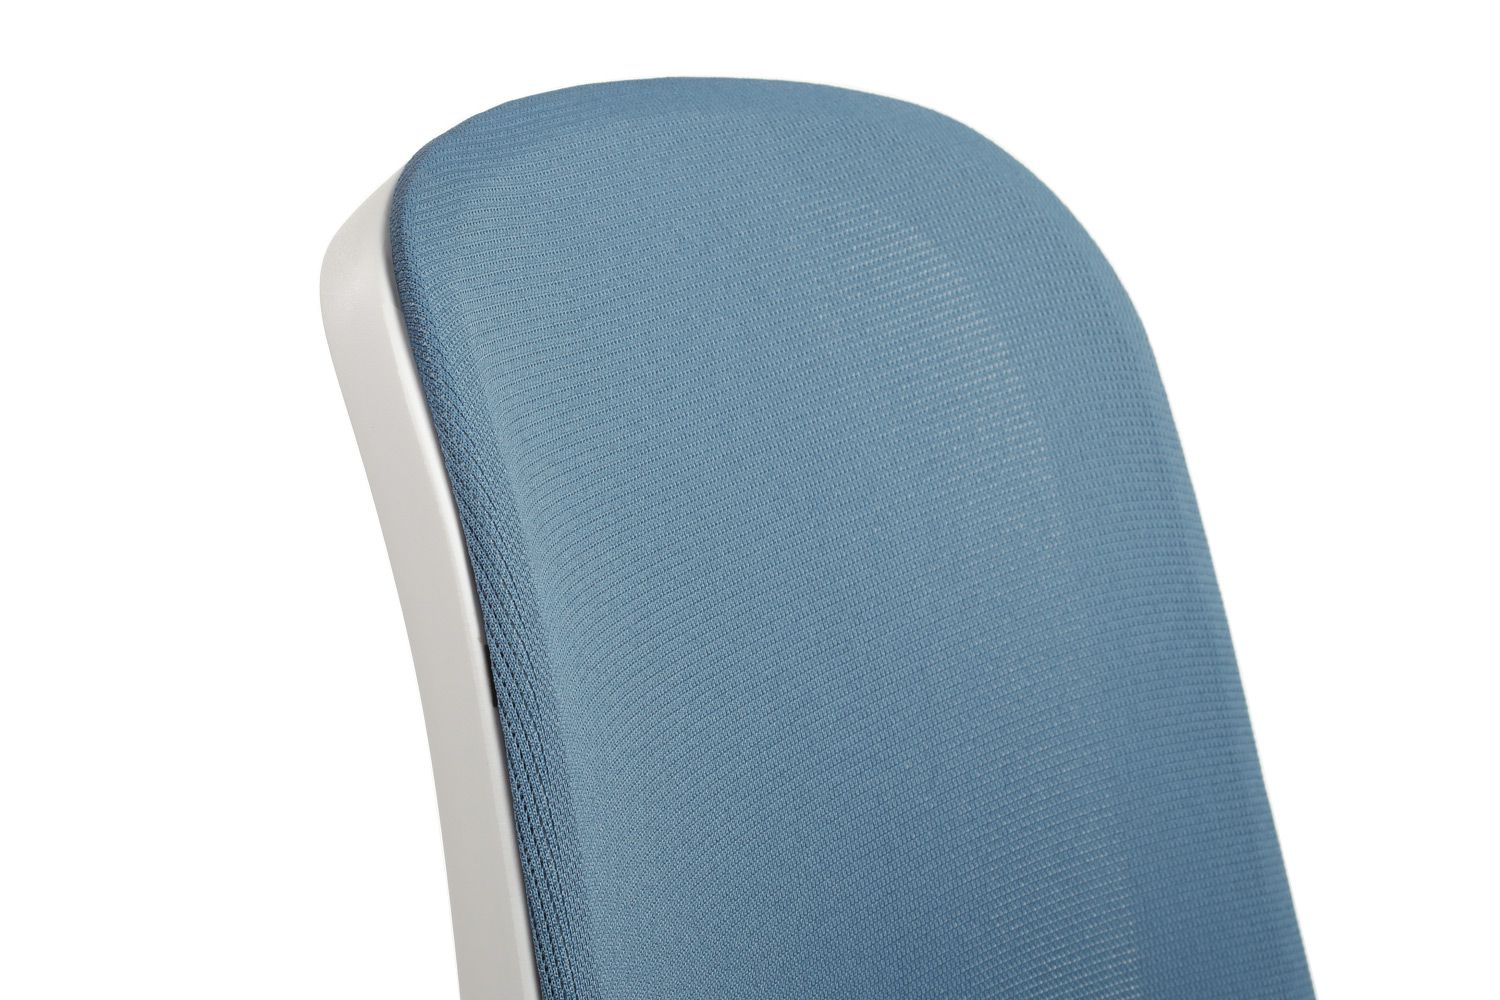 Кресло RIVA DESIGN W-158 синий / белый пластик